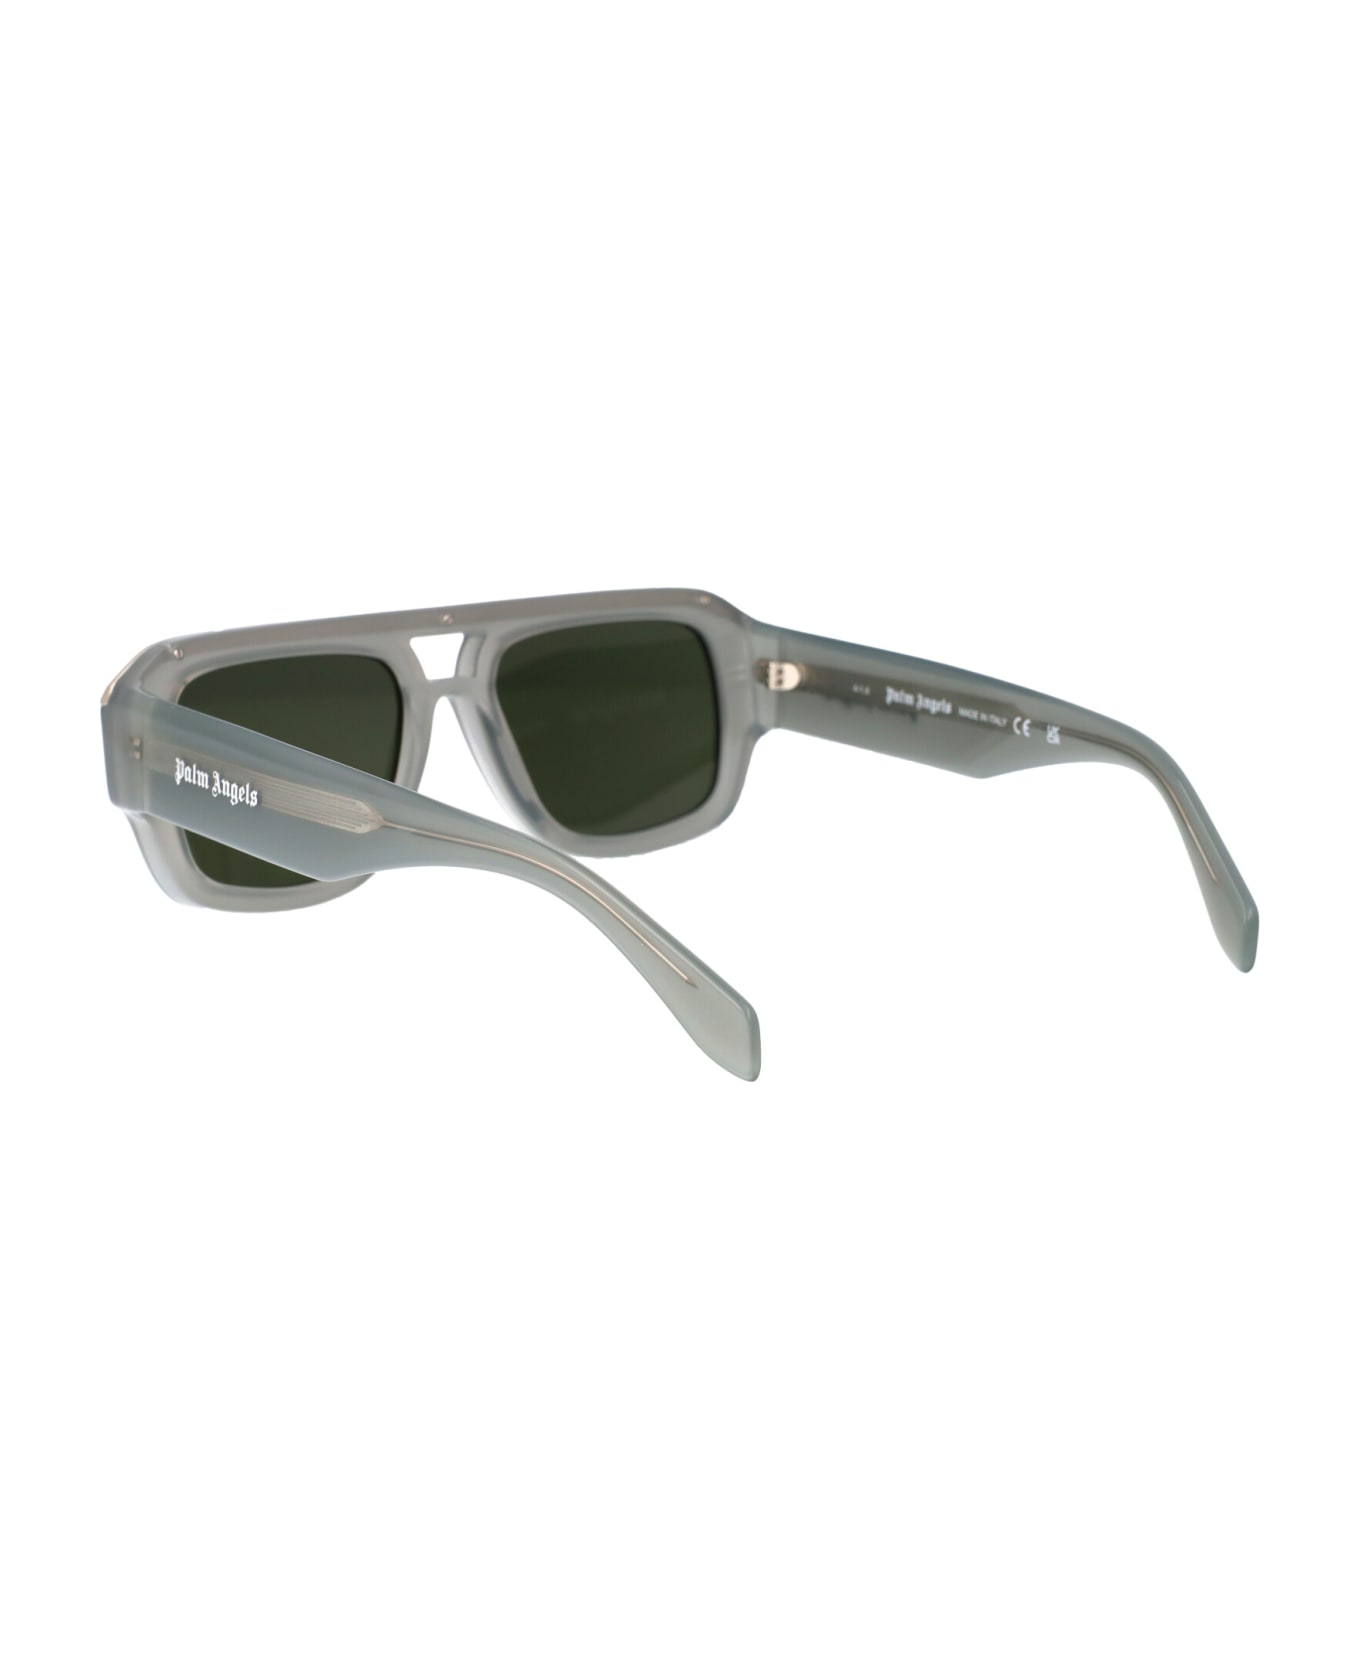 Palm Angels Stockton Sunglasses - 0955 GREY  サングラス